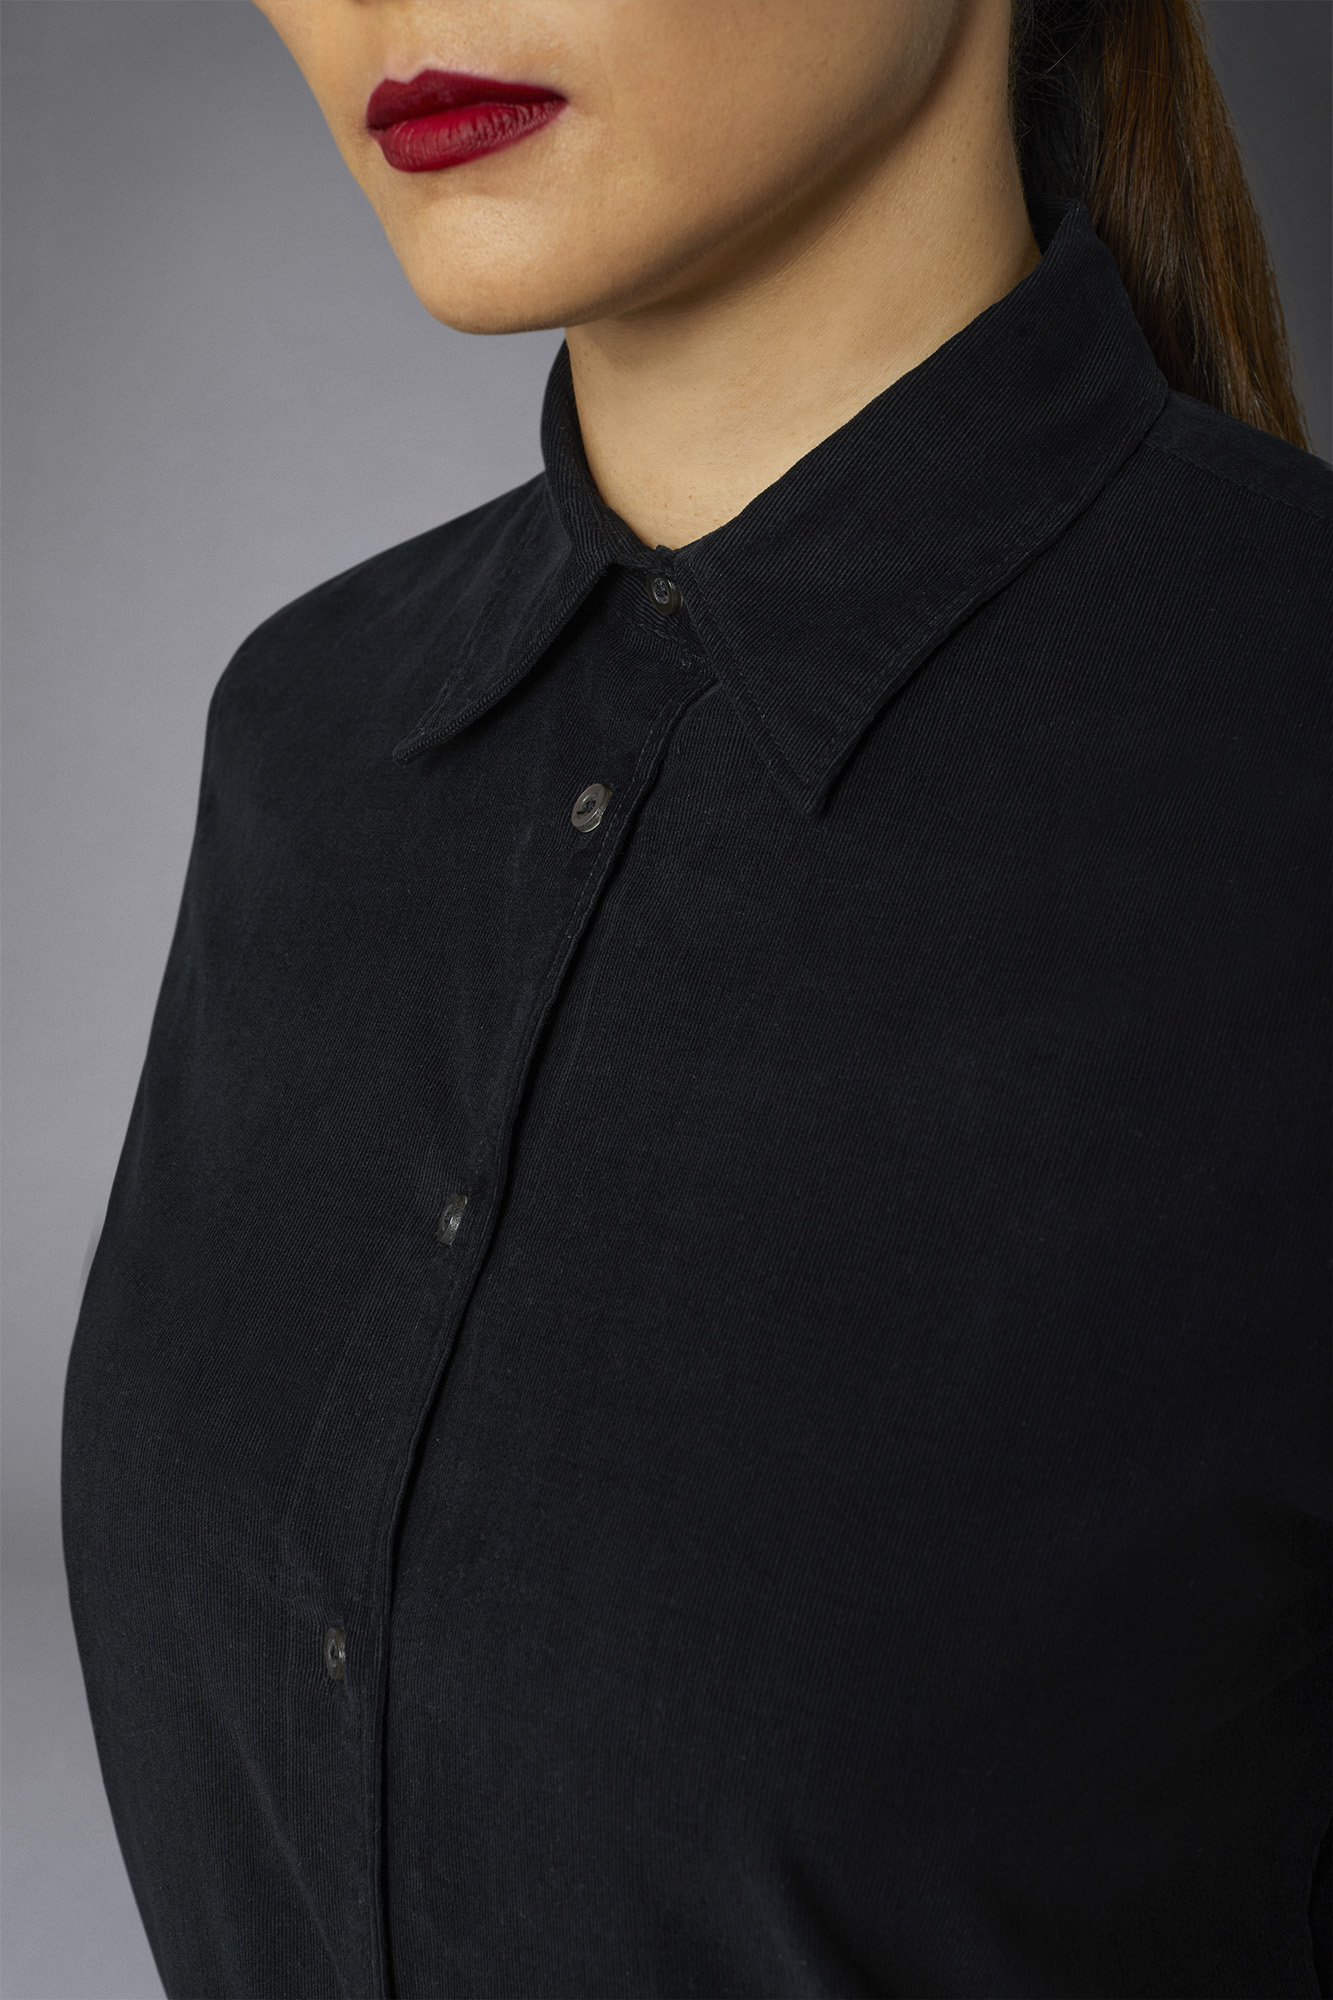 Women's casual shirt needlecord washed velvet image number null